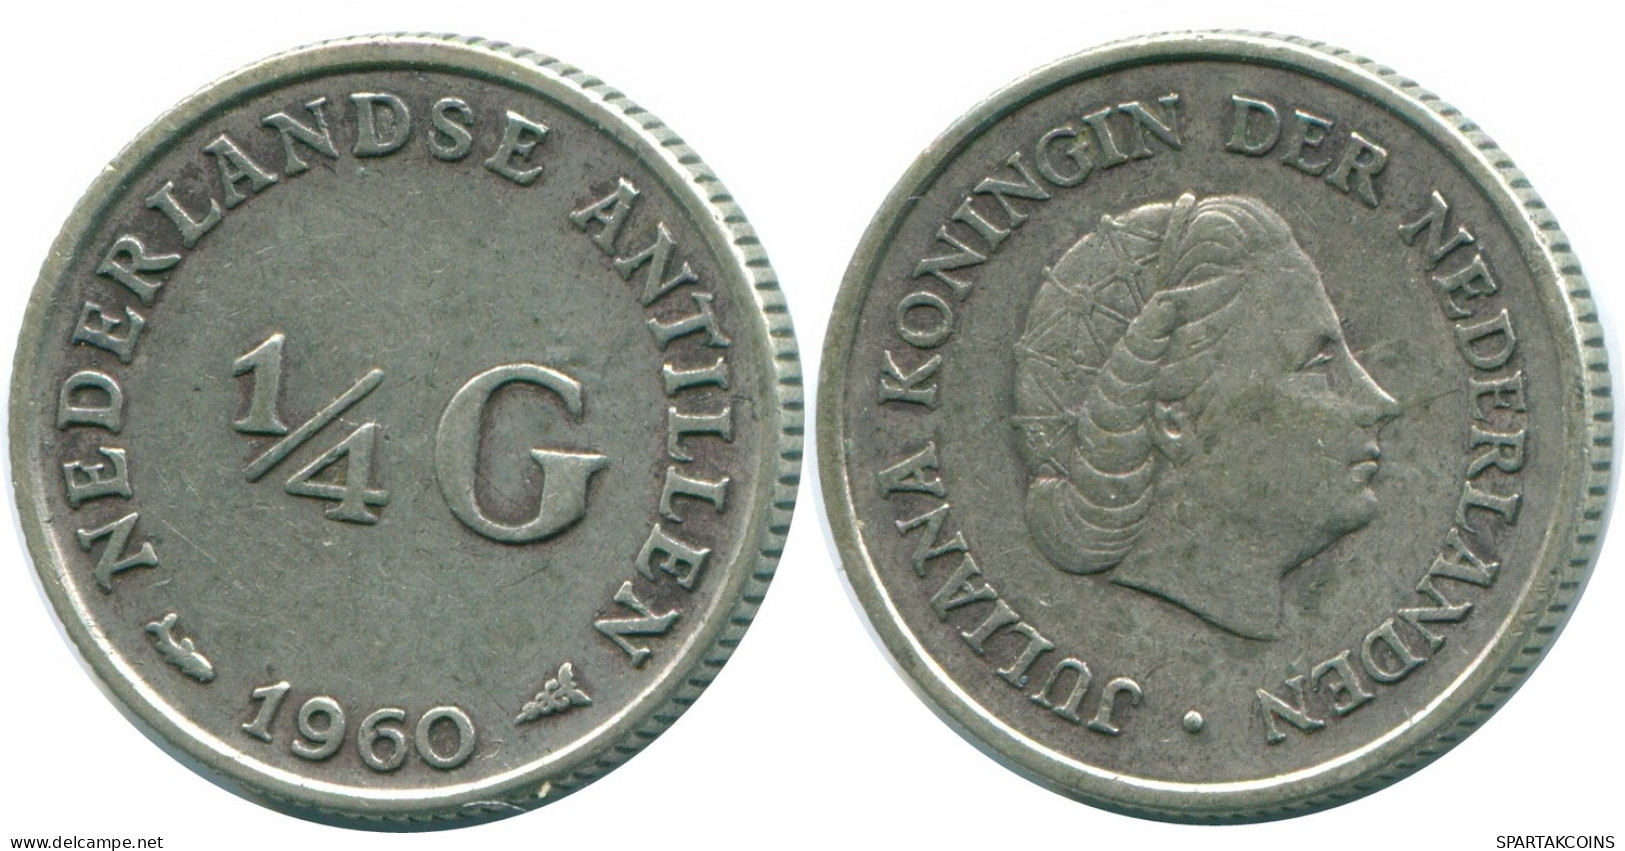 1/4 GULDEN 1960 NETHERLANDS ANTILLES SILVER Colonial Coin #NL11083.4.U.A - Niederländische Antillen